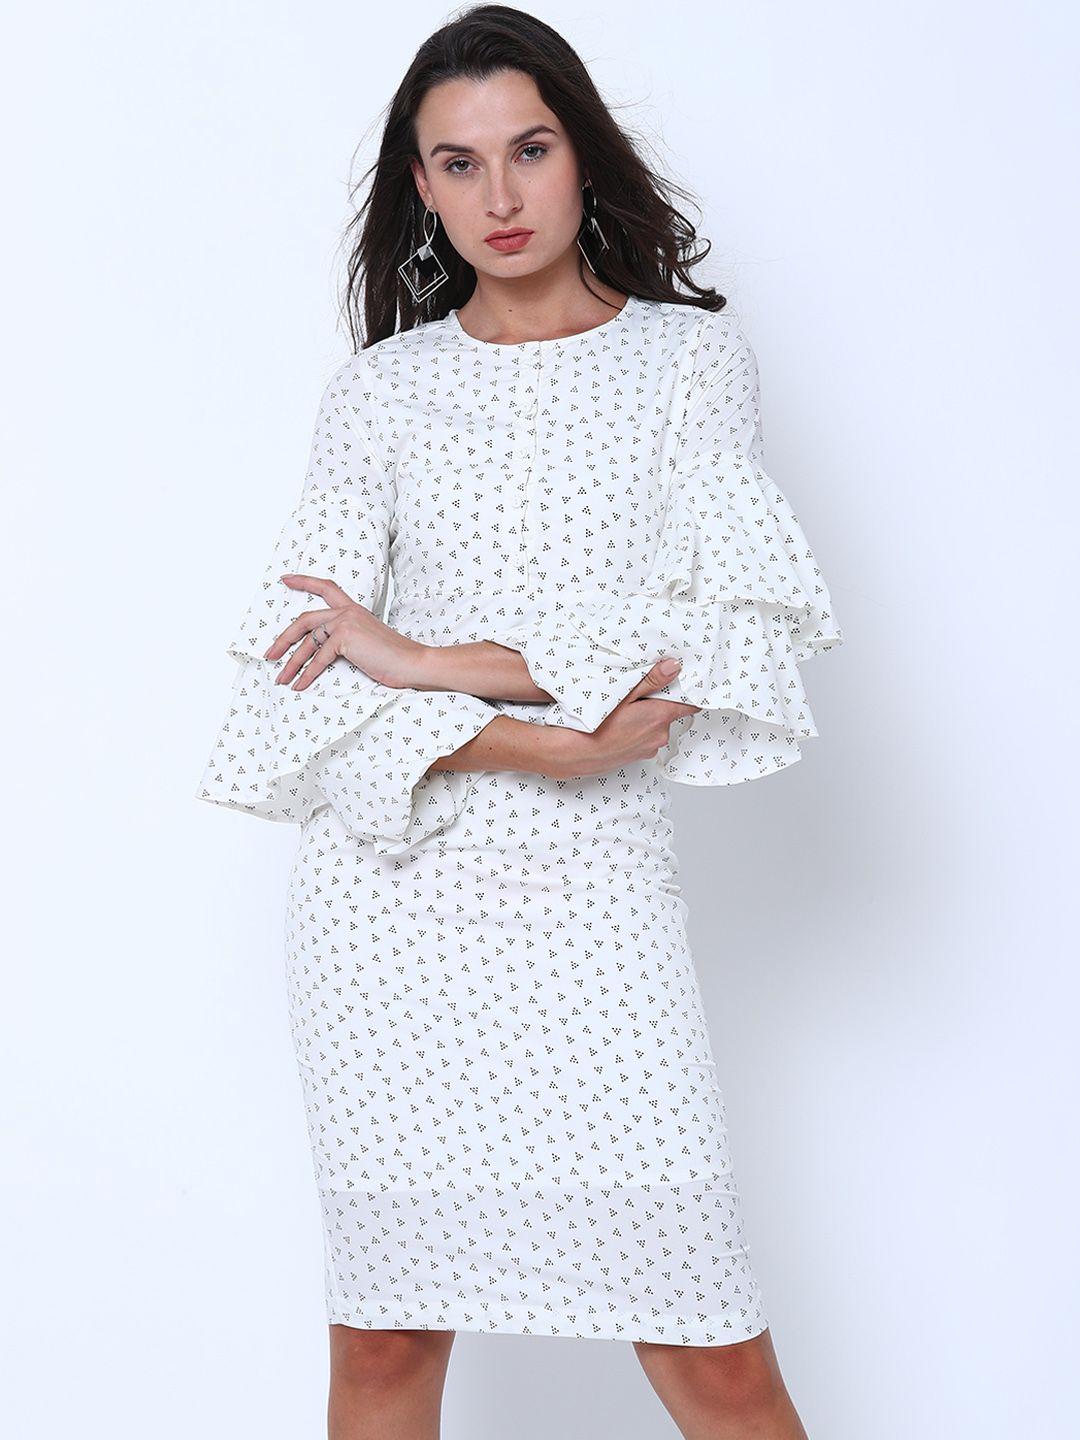 tokyo talkies women white & black printed sheath dress